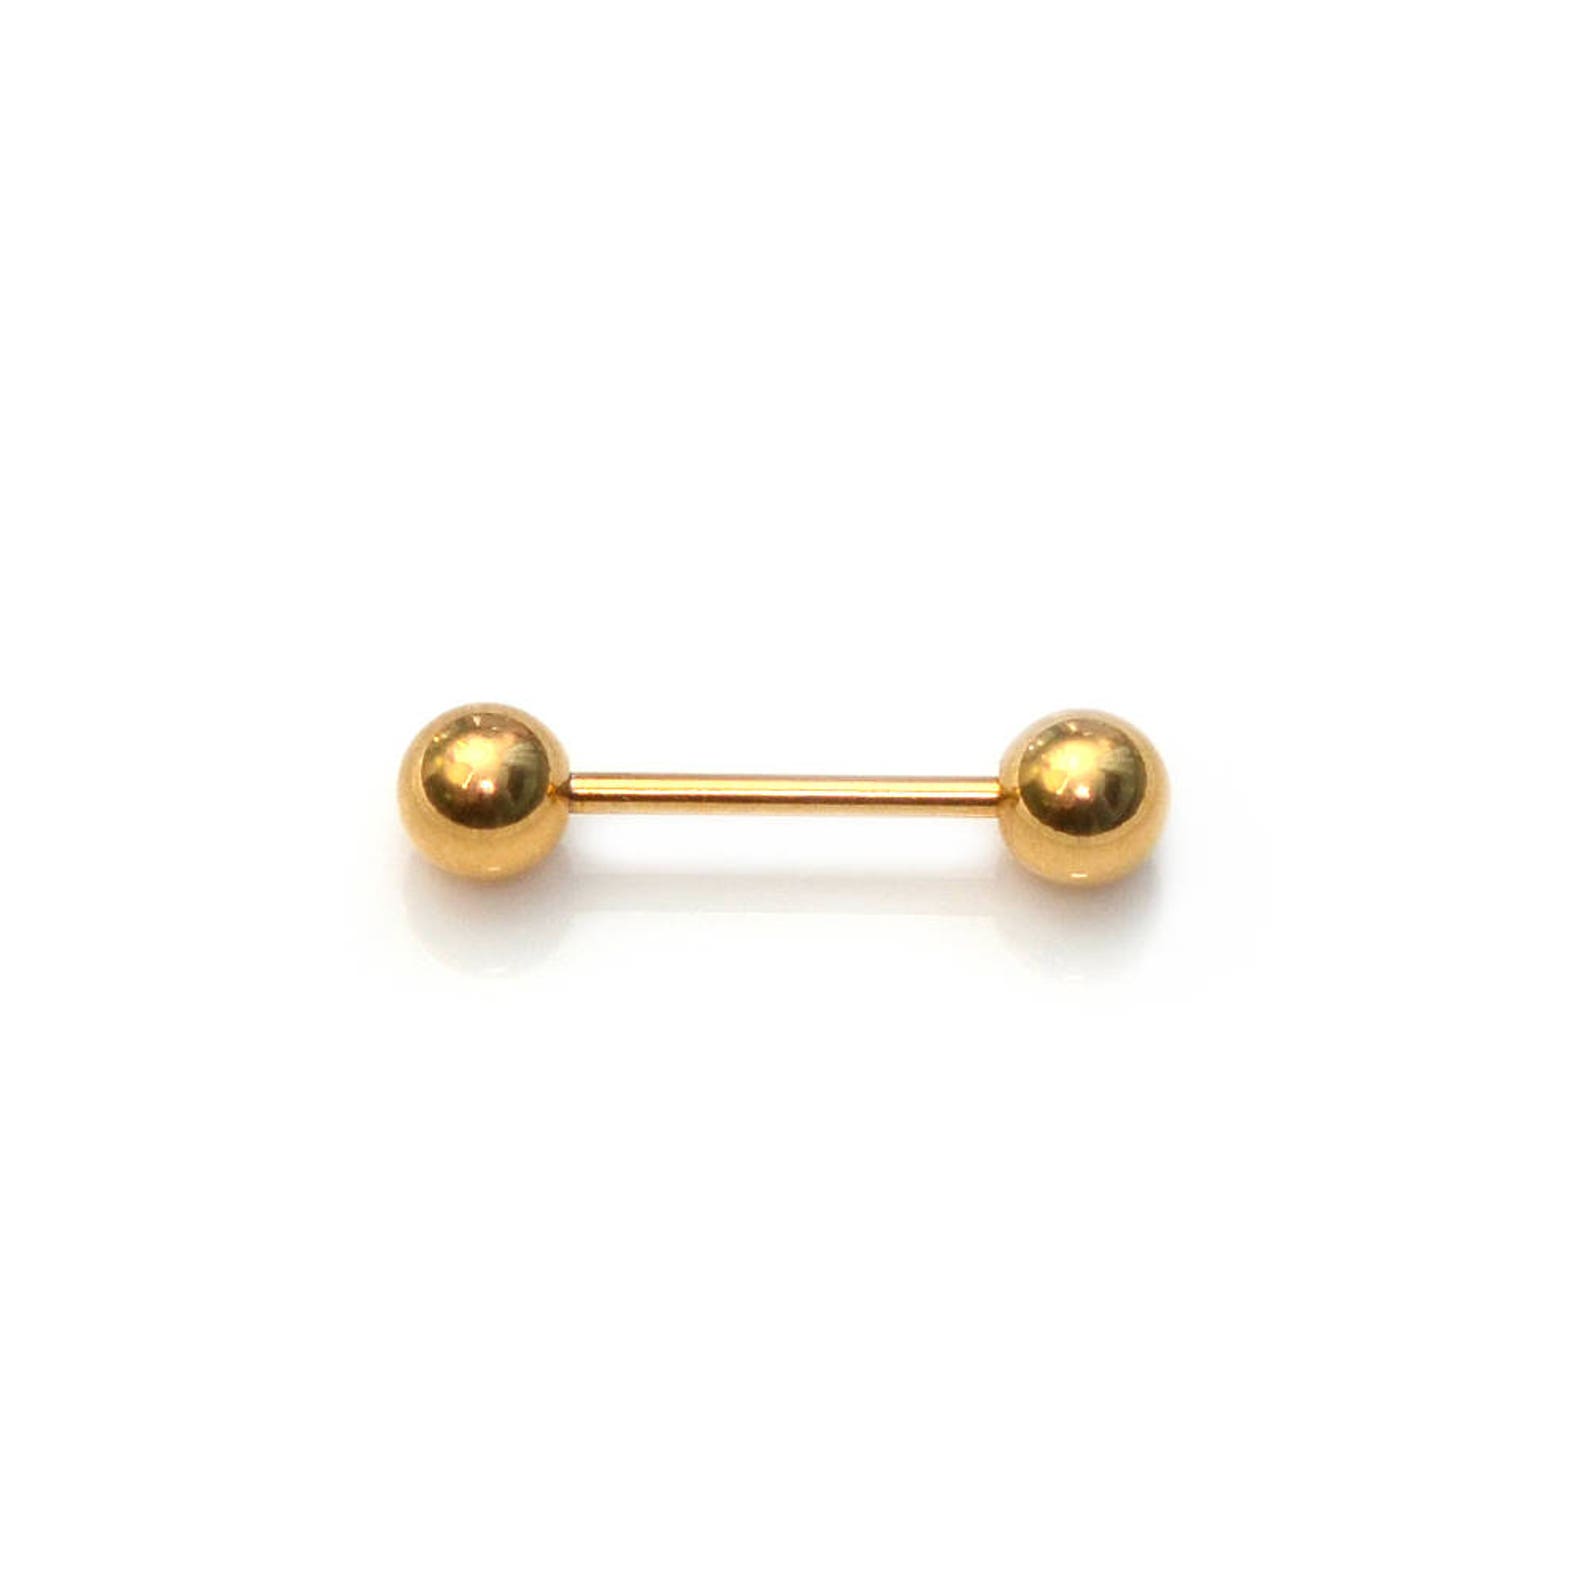 NIPPLE RING BARBELL / surgical steel nipple piercing jewelry | Etsy